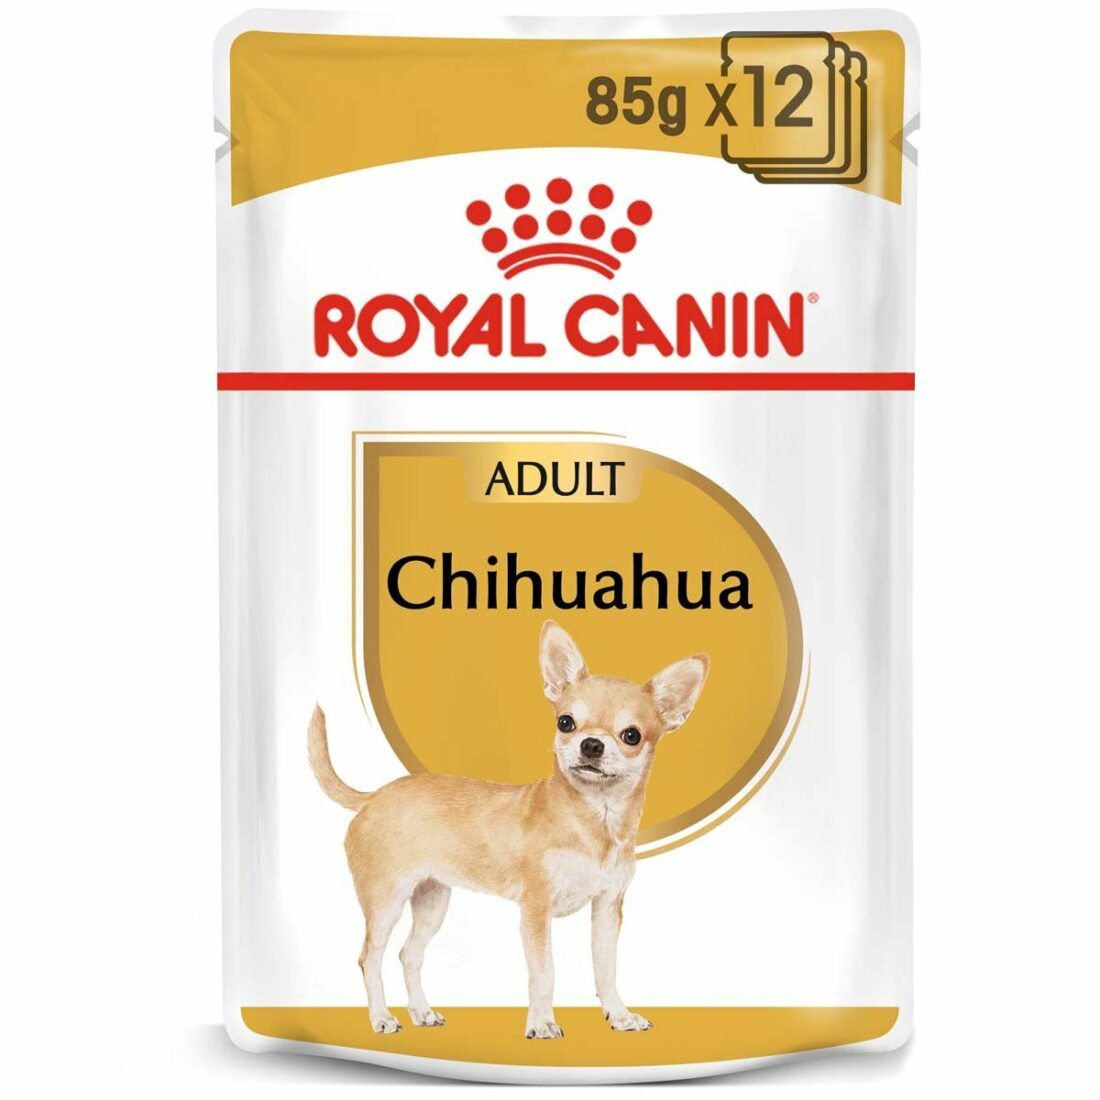 ROYAL CANIN Chihuahua Adult kapsička pro